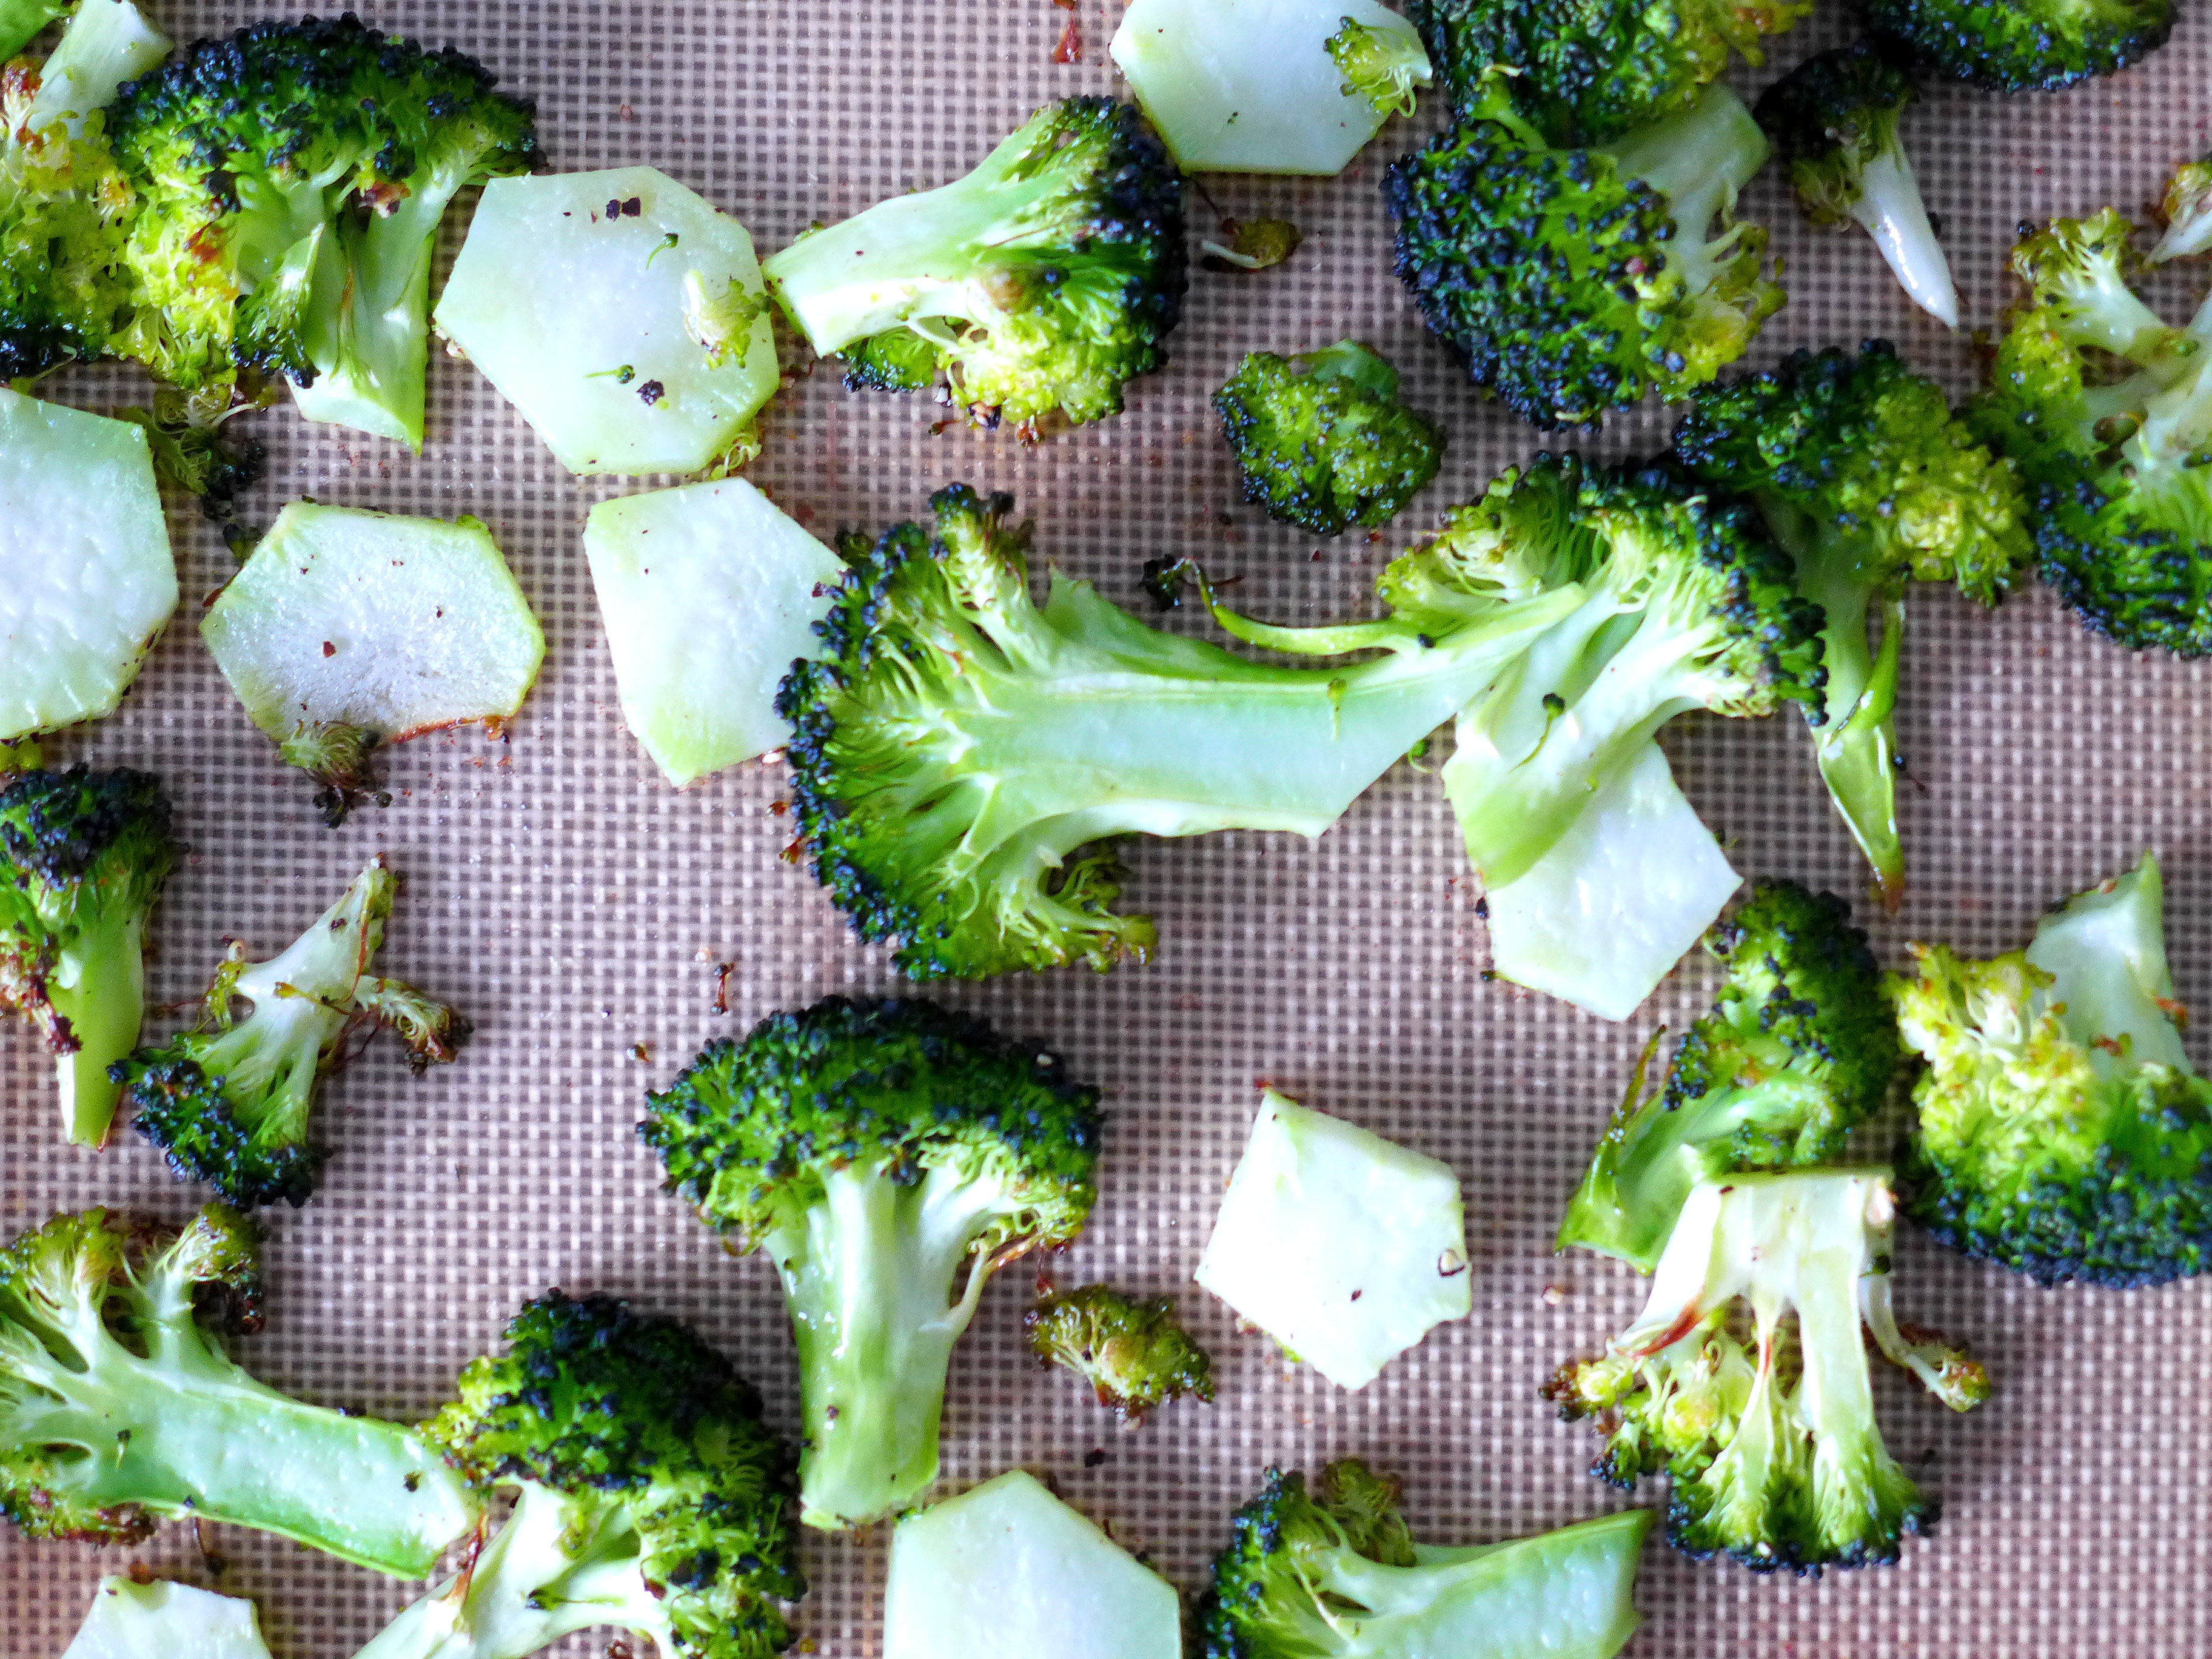 oven-roasted broccoli